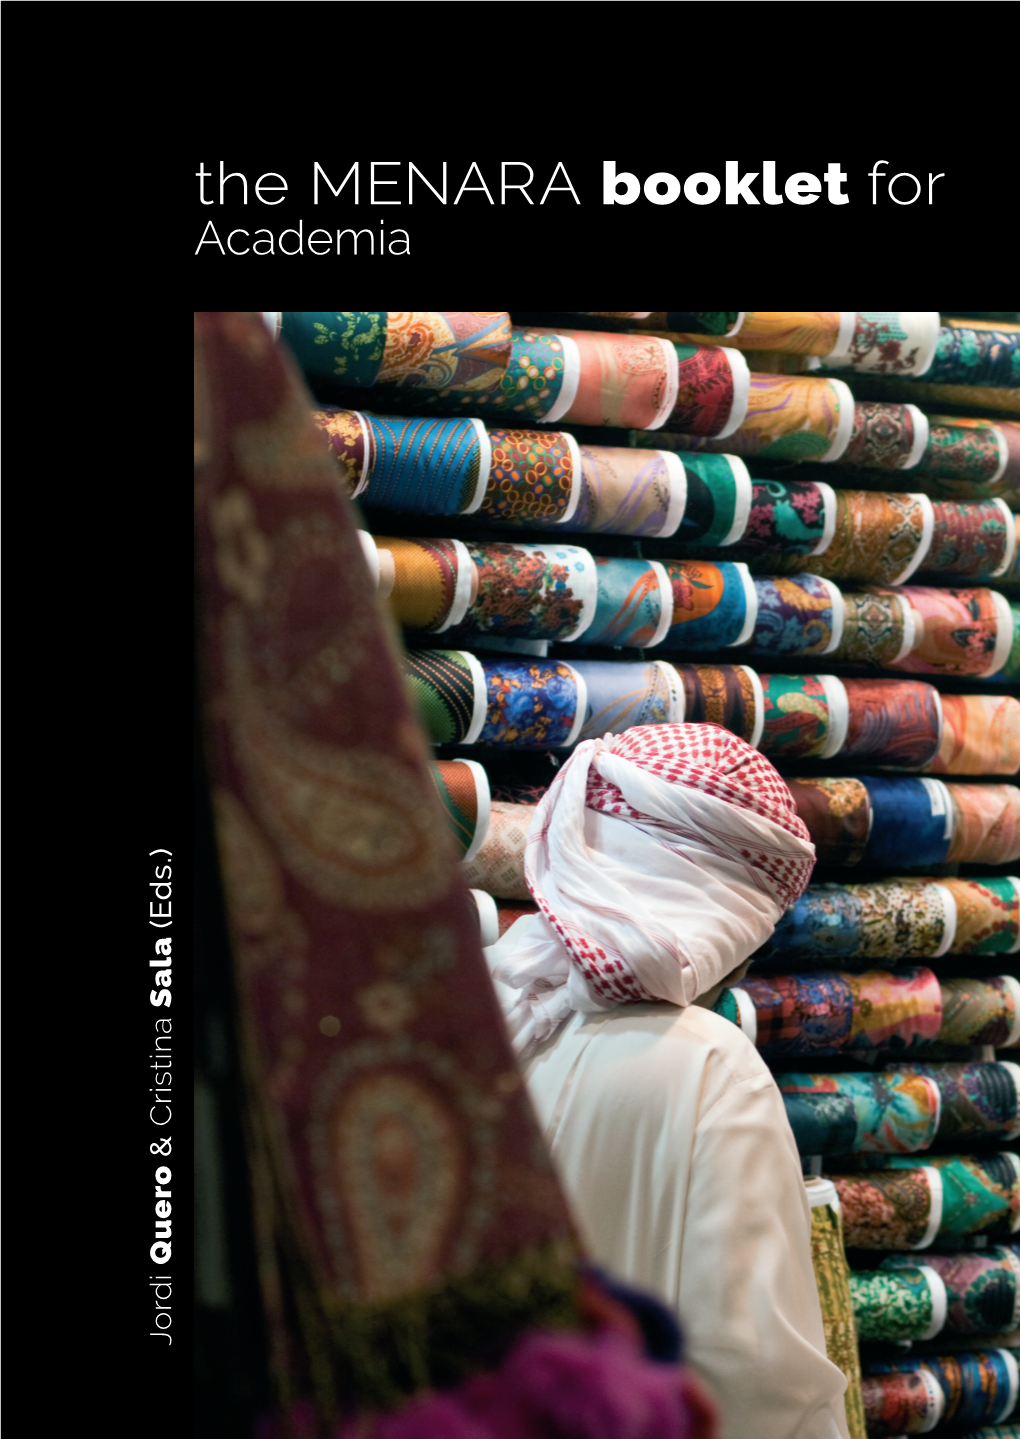 The MENARA Booklet for Academia (Eds.) Sala Cristina Cristina & Quero Jordi the MENARA Booklet For